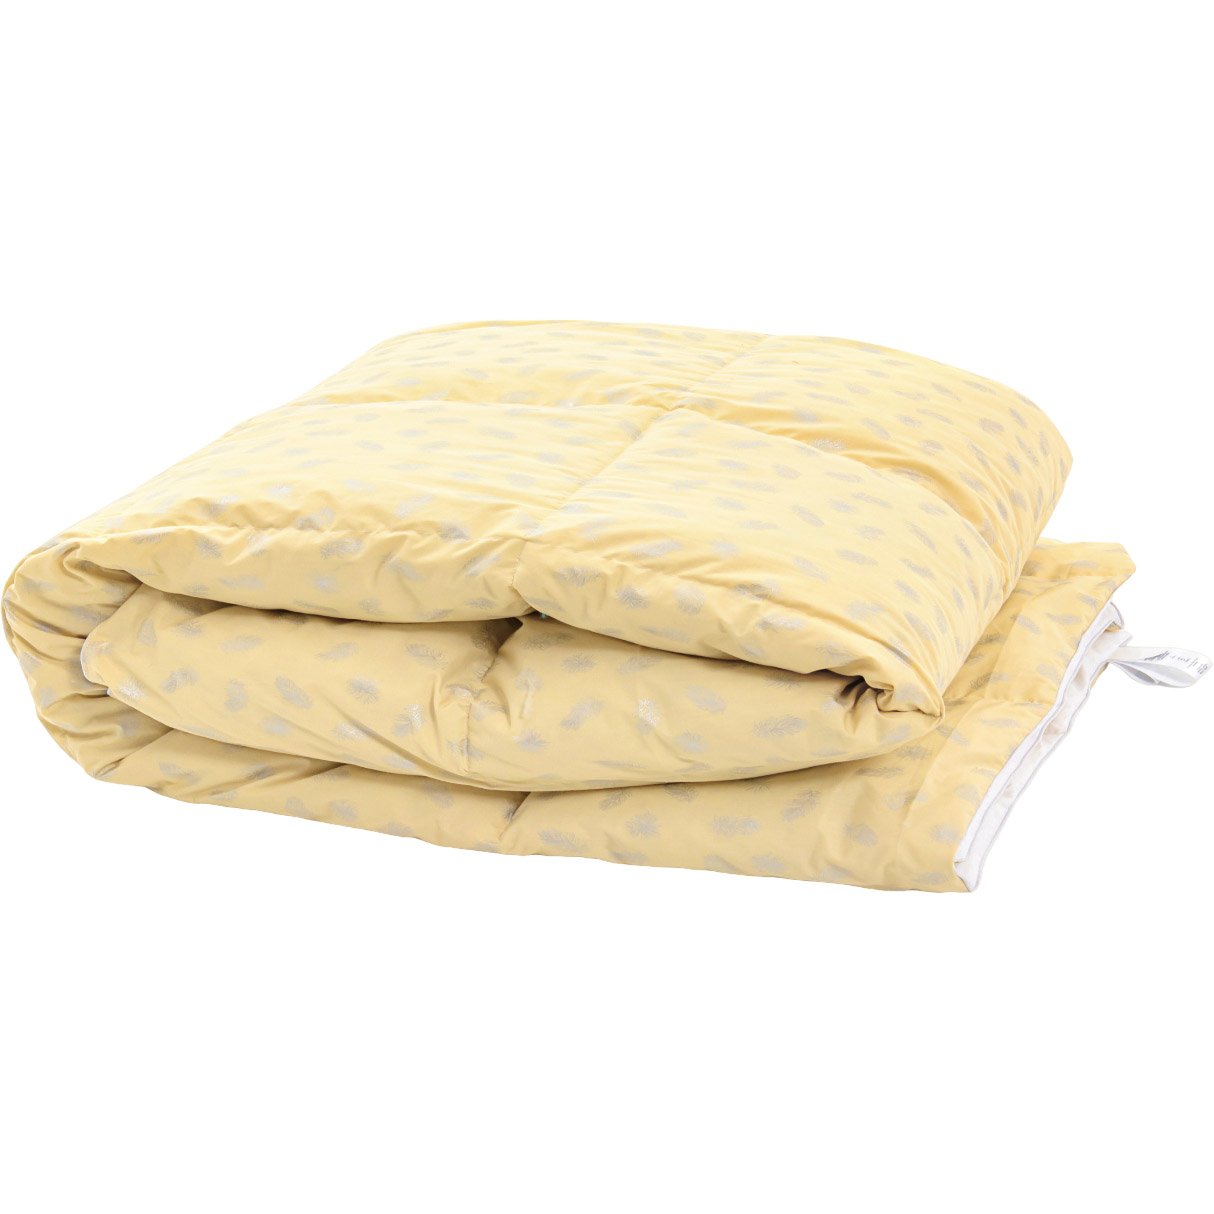 Одеяло пуховое MirSon Karmen №1836 Bio-Beige, 90% пух, полуторное, 215x155, бежевое (2200003013399) - фото 1